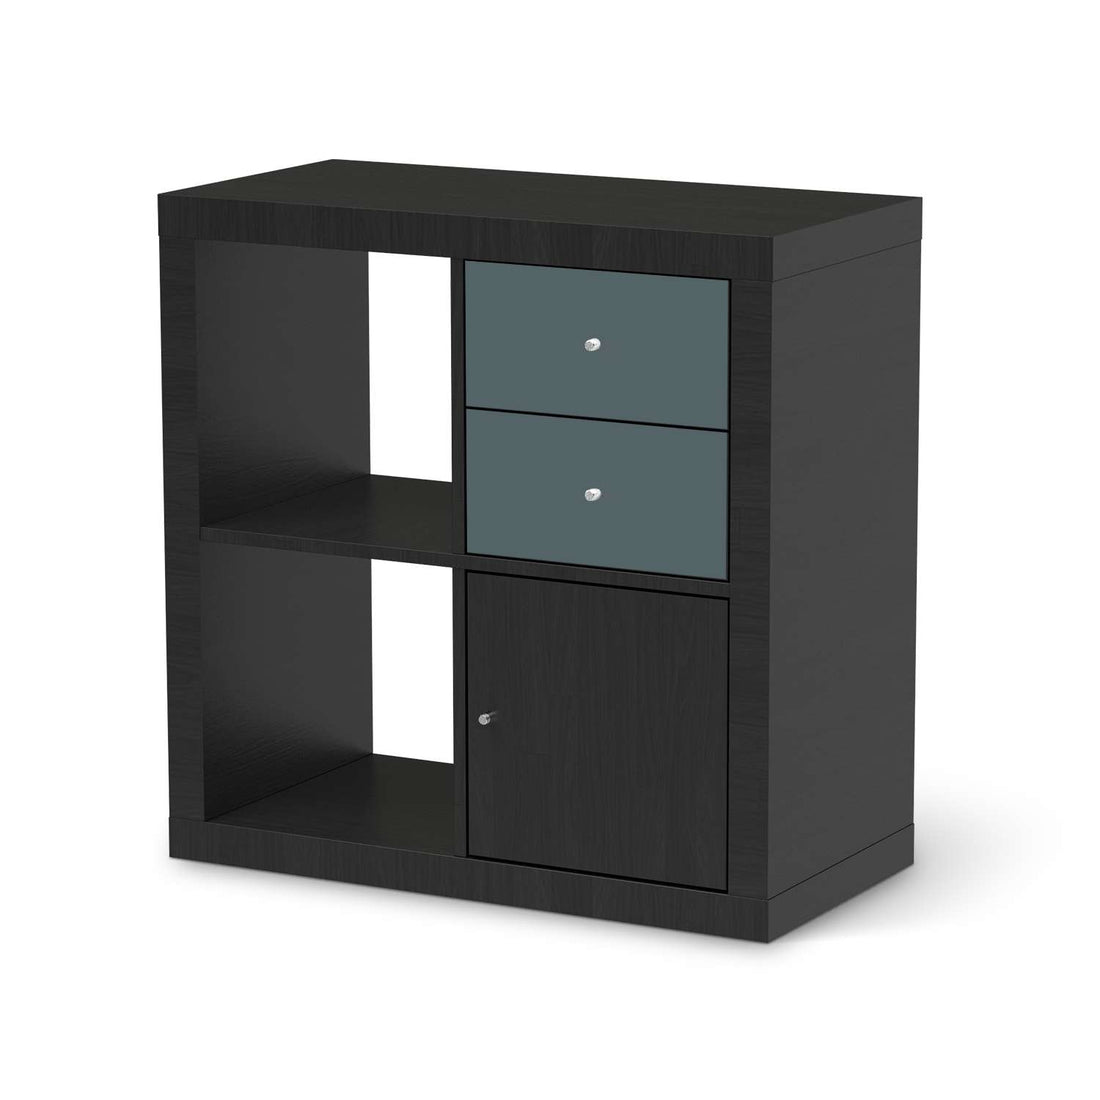 Möbelfolie IKEA Blaugrau Light - IKEA Expedit Regal Schubladen - schwarz